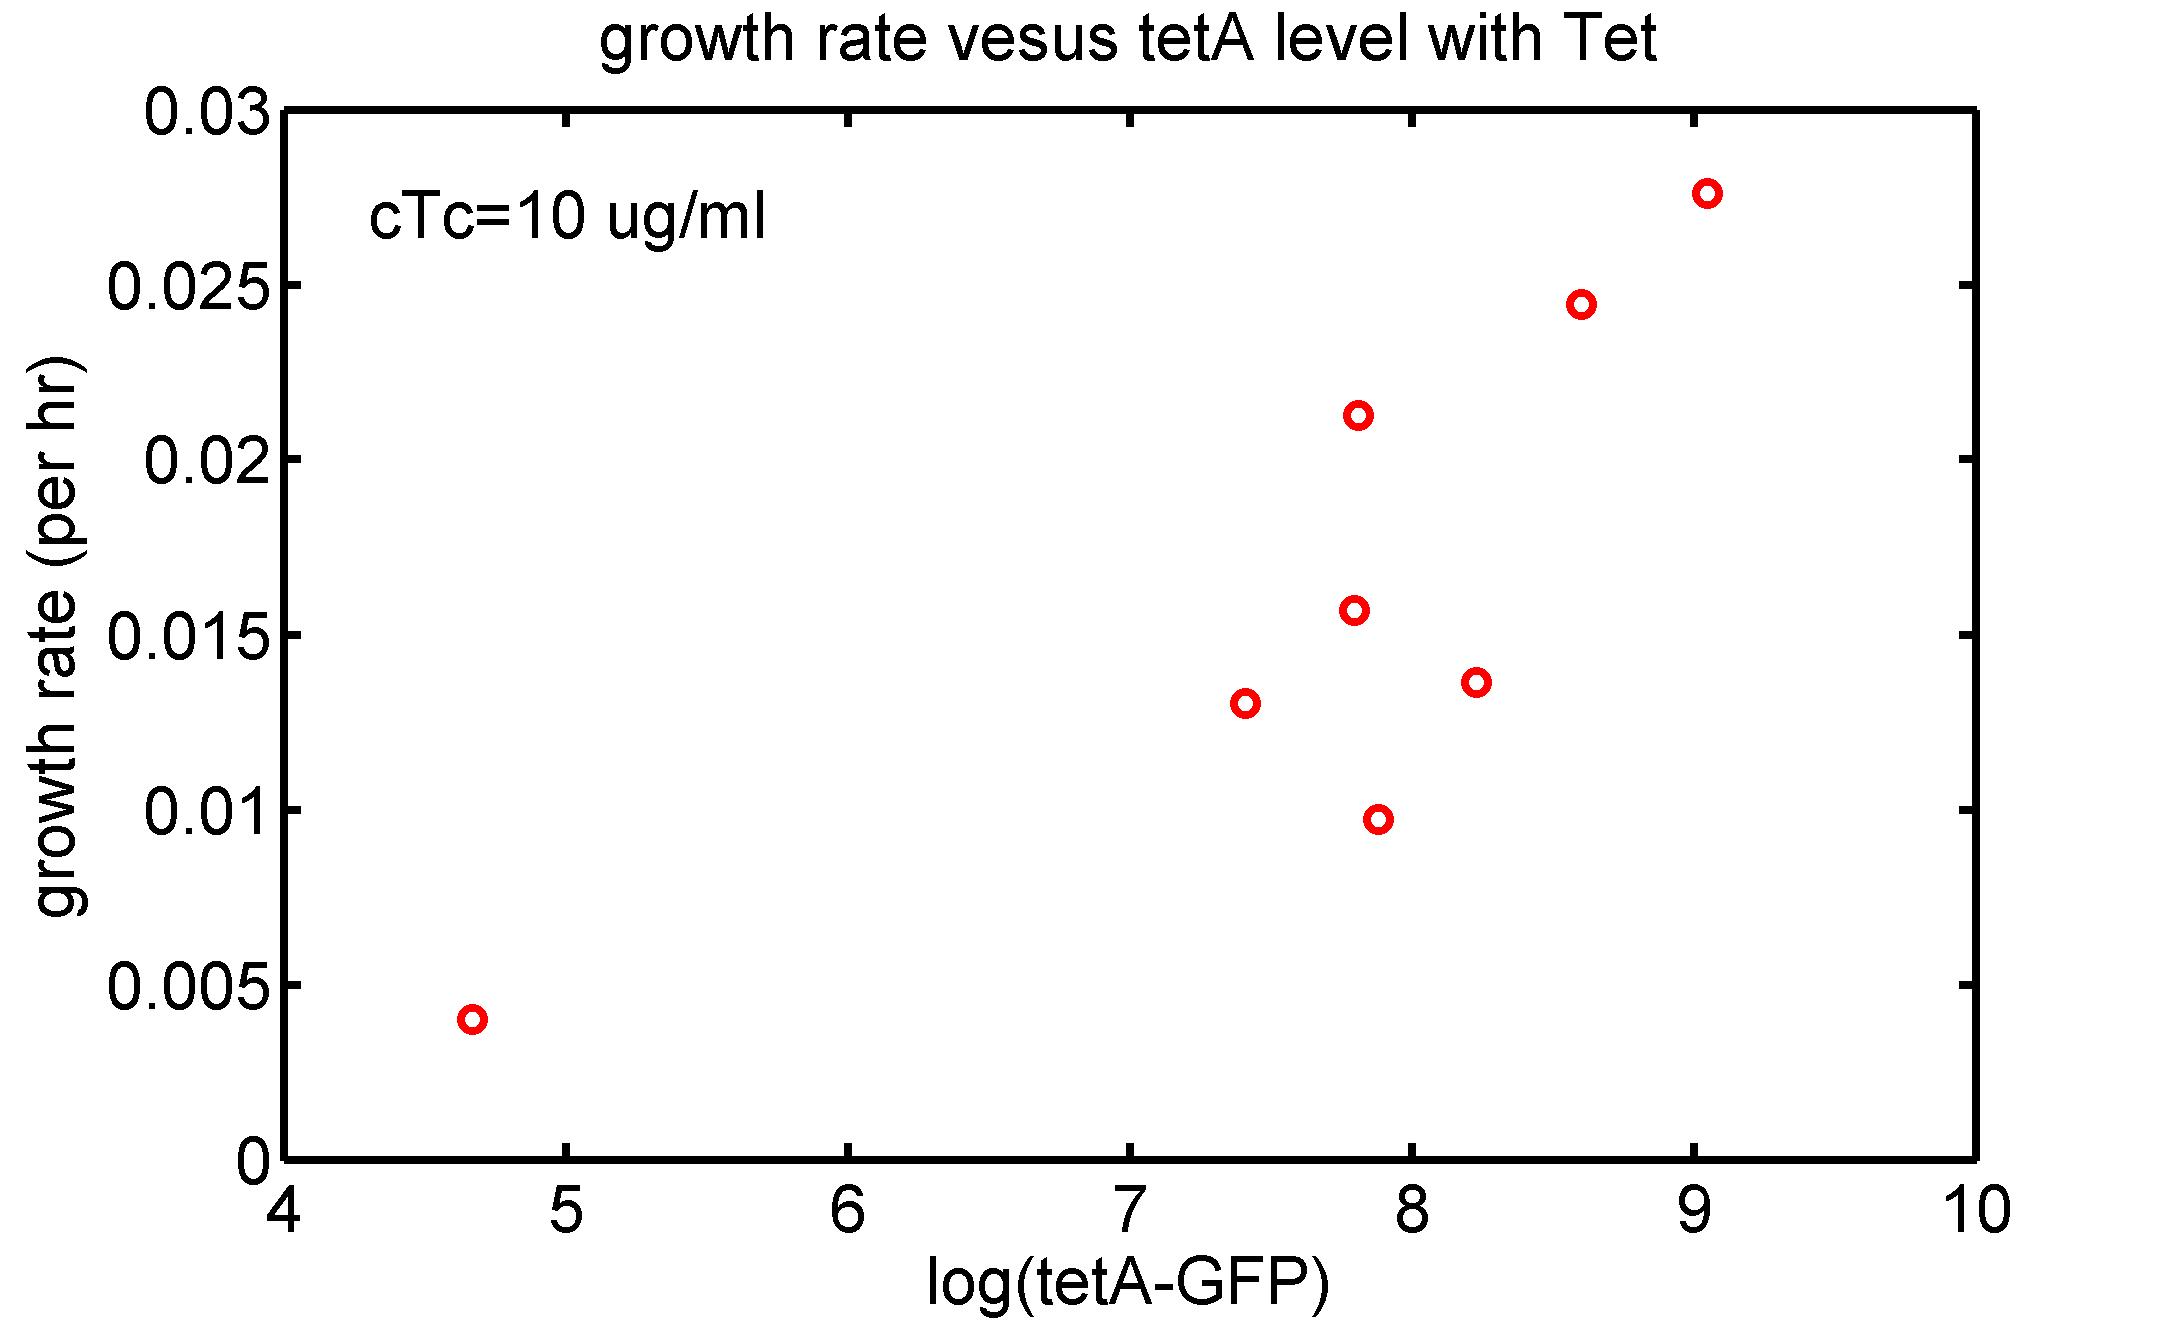 TetA-vs-growth rate with cTc 10.jpg